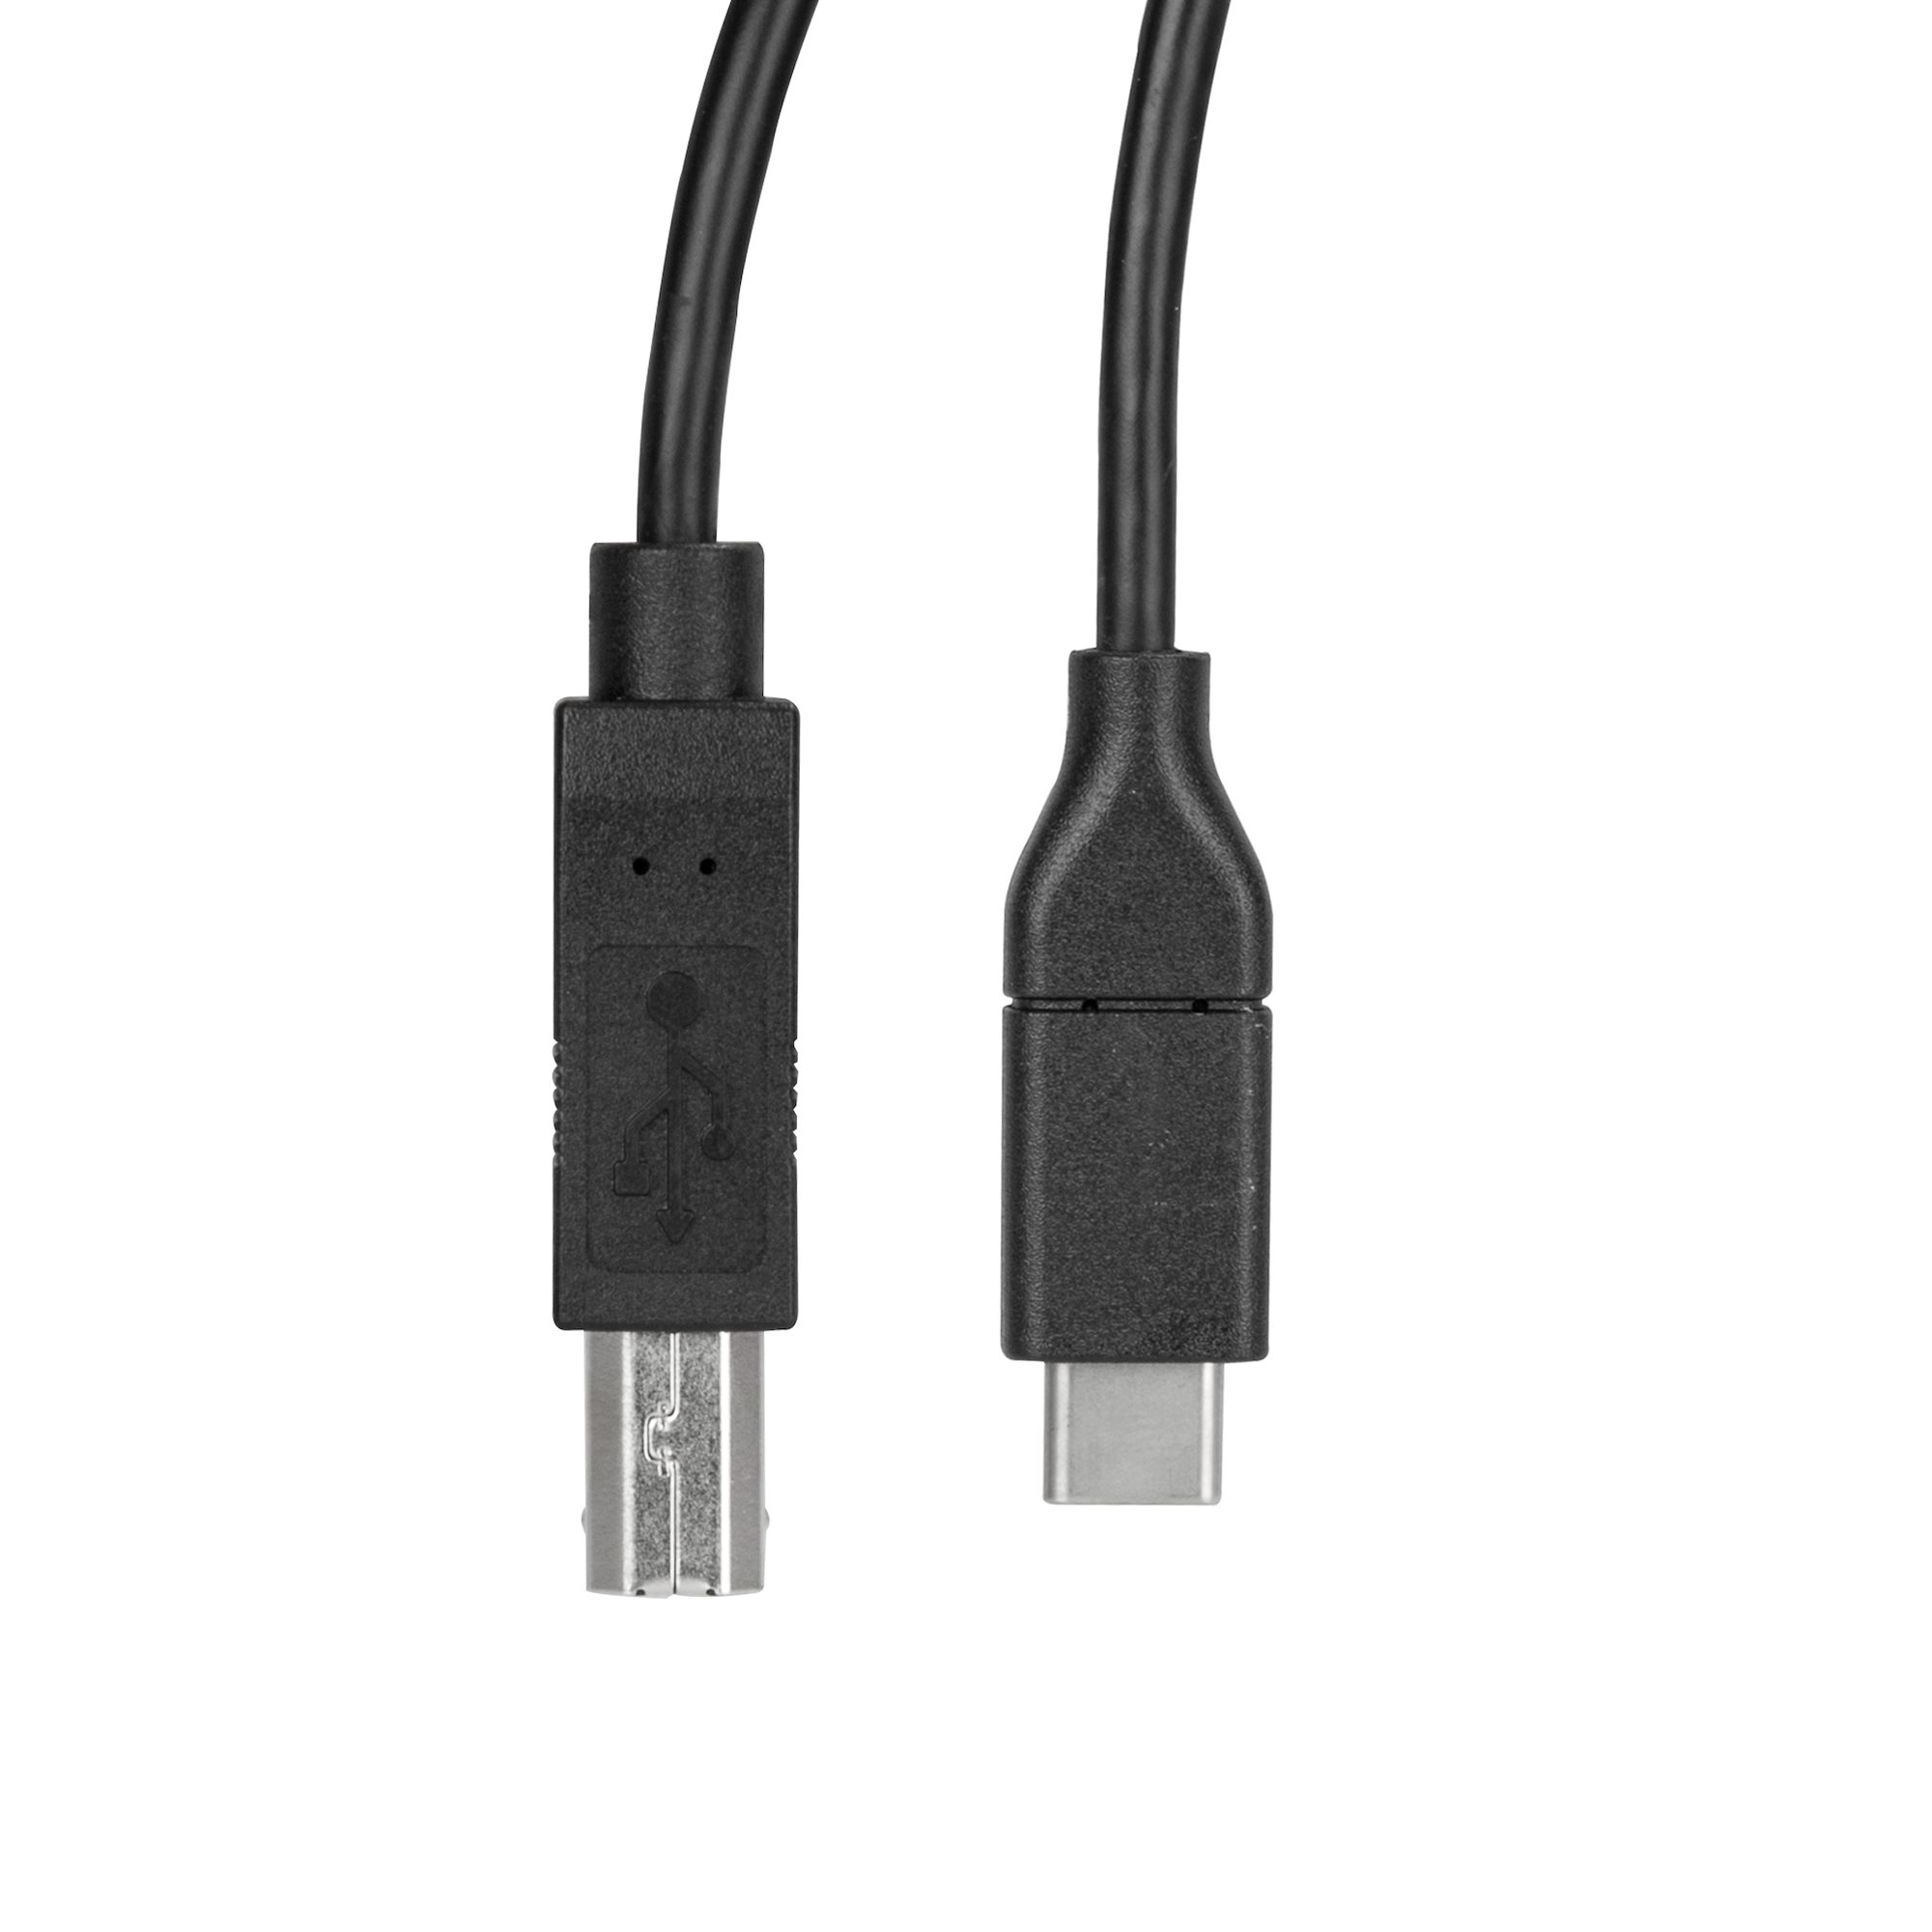 USB B to USB C 3 FT, USB C Printer Cable, Nylon USB B to C